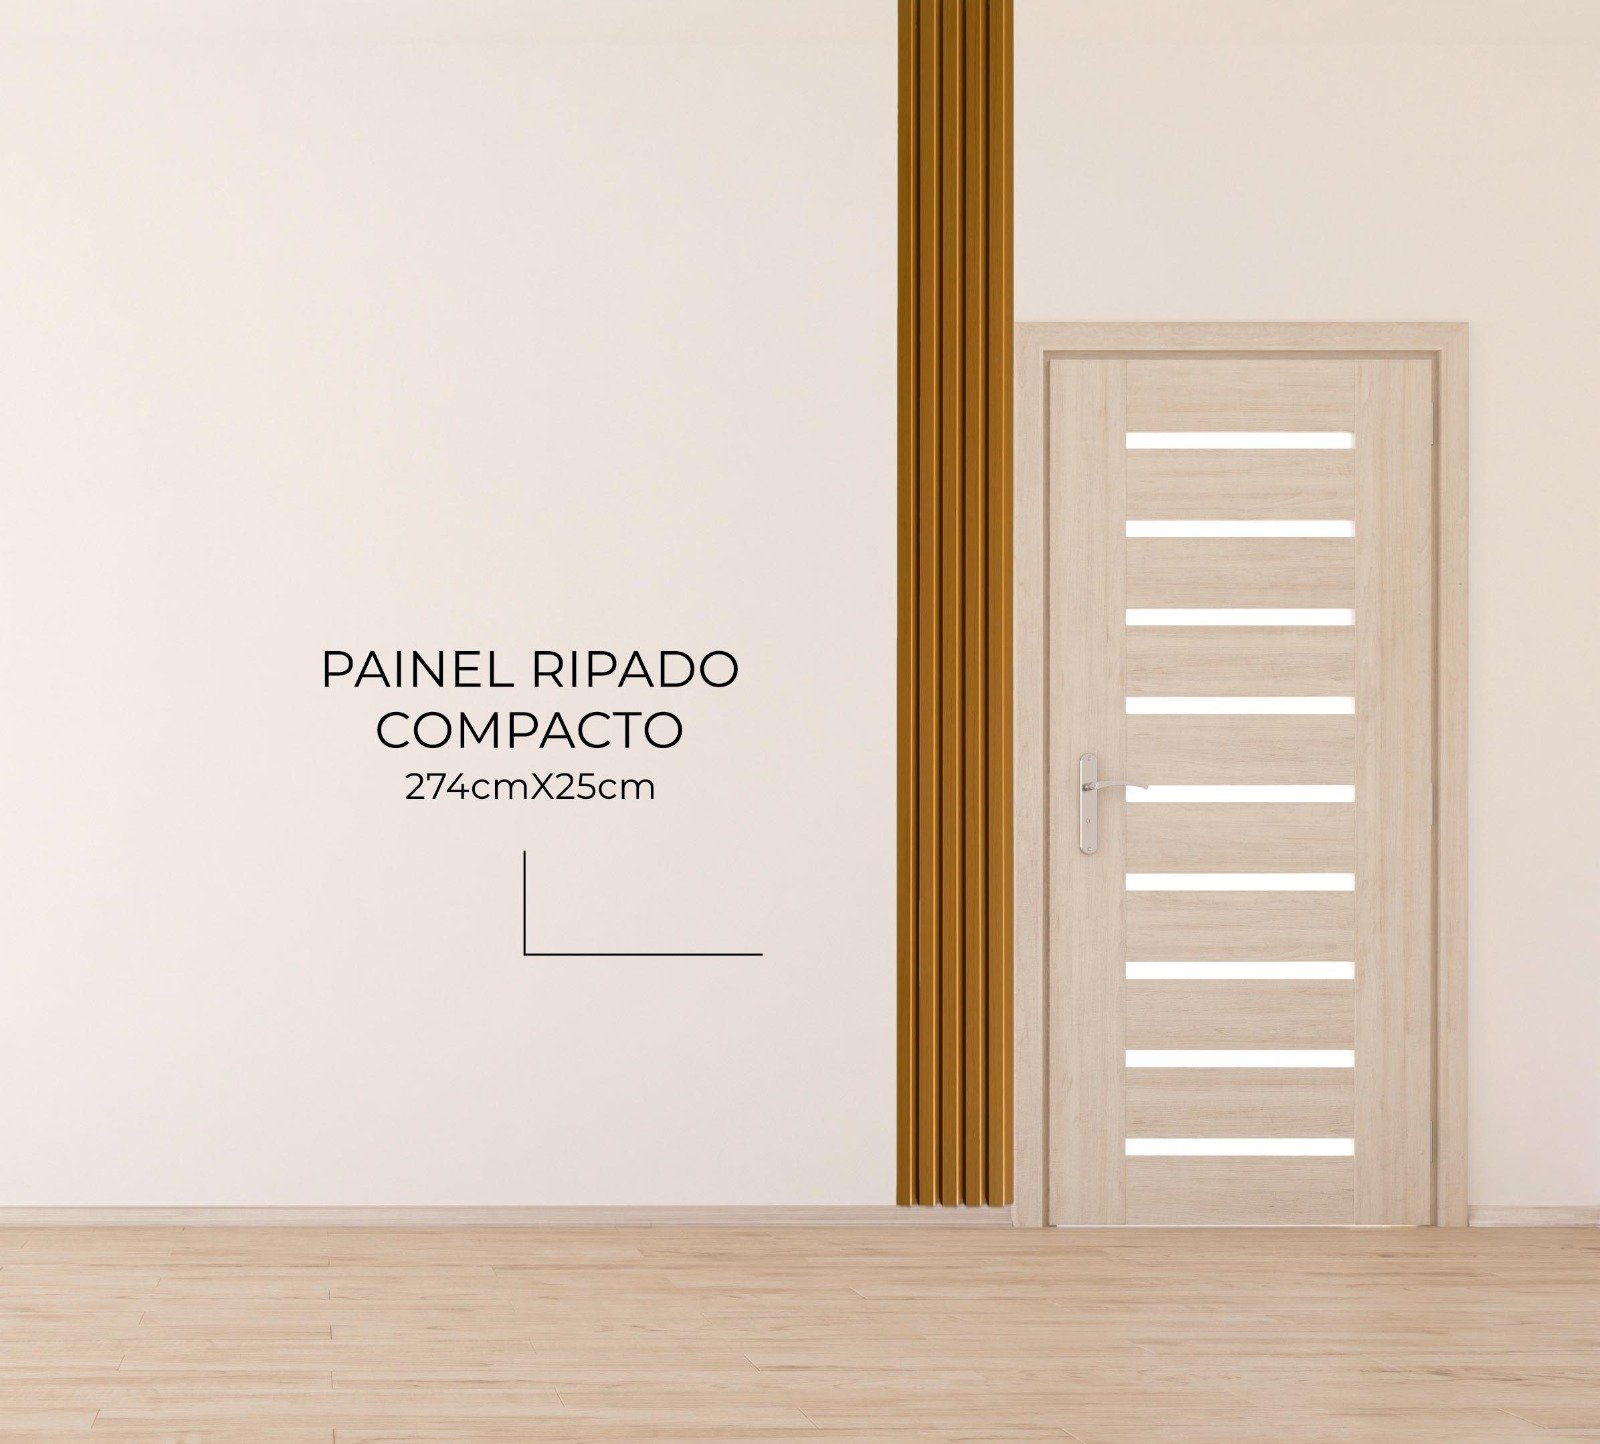 Painel Ripado Compacto 01: Unid. 274x25cm Larg. Talatto Painéis Gianduia - 5